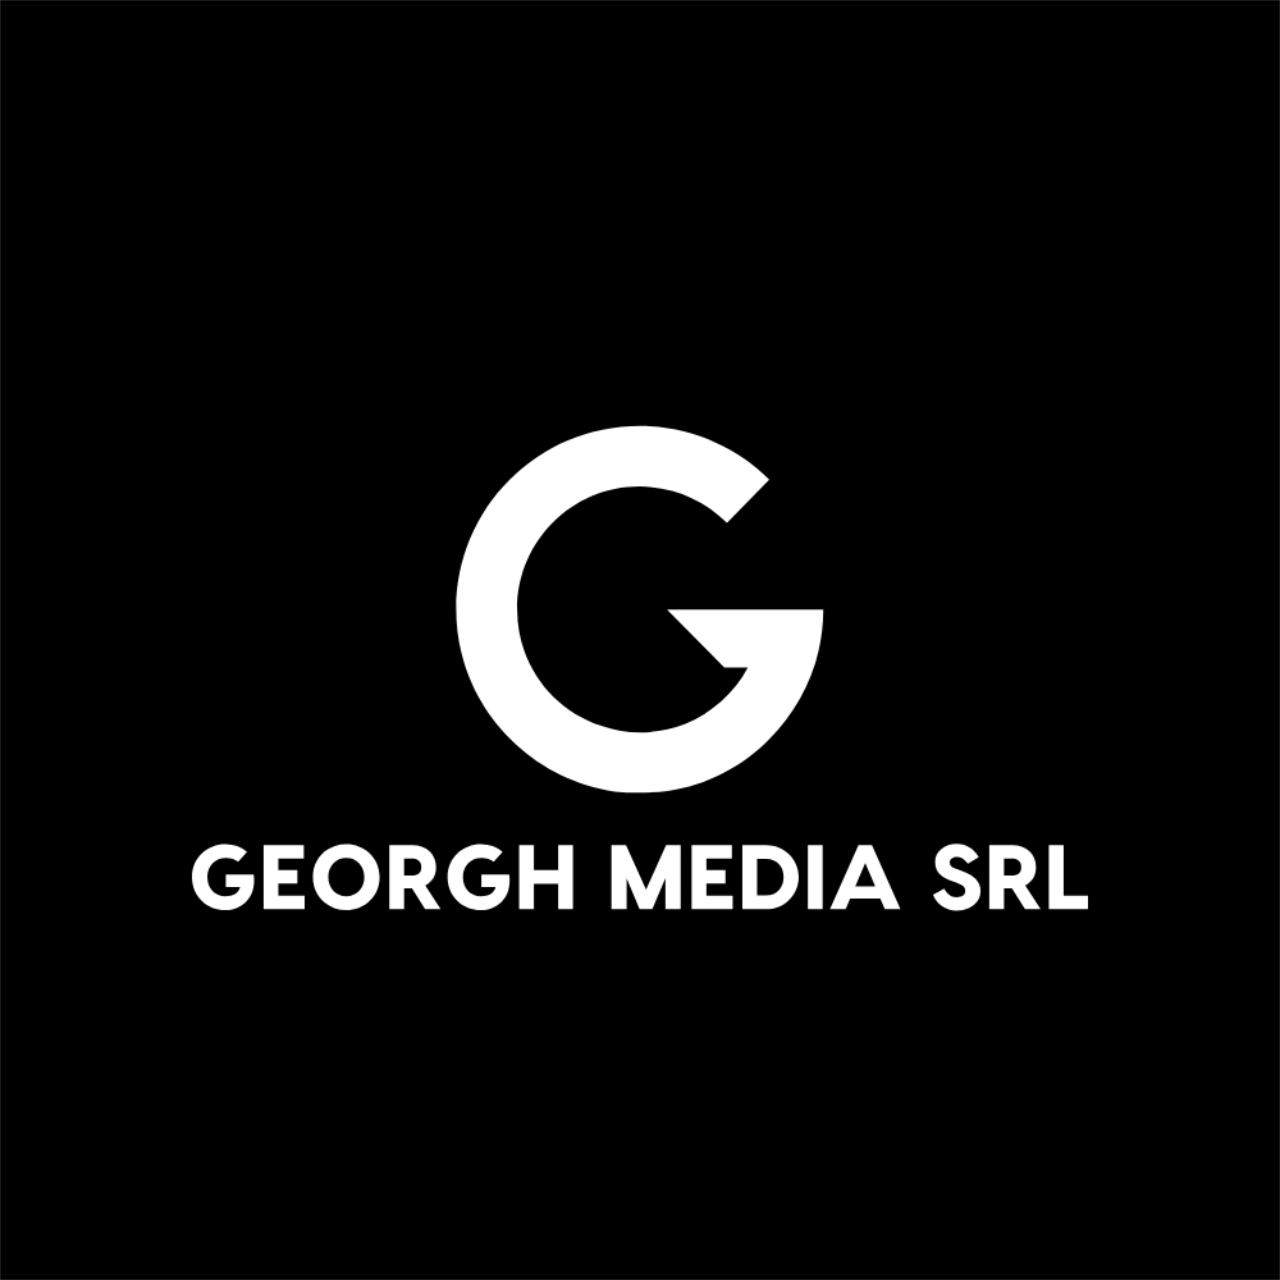 GEORGH MEDIA's logo